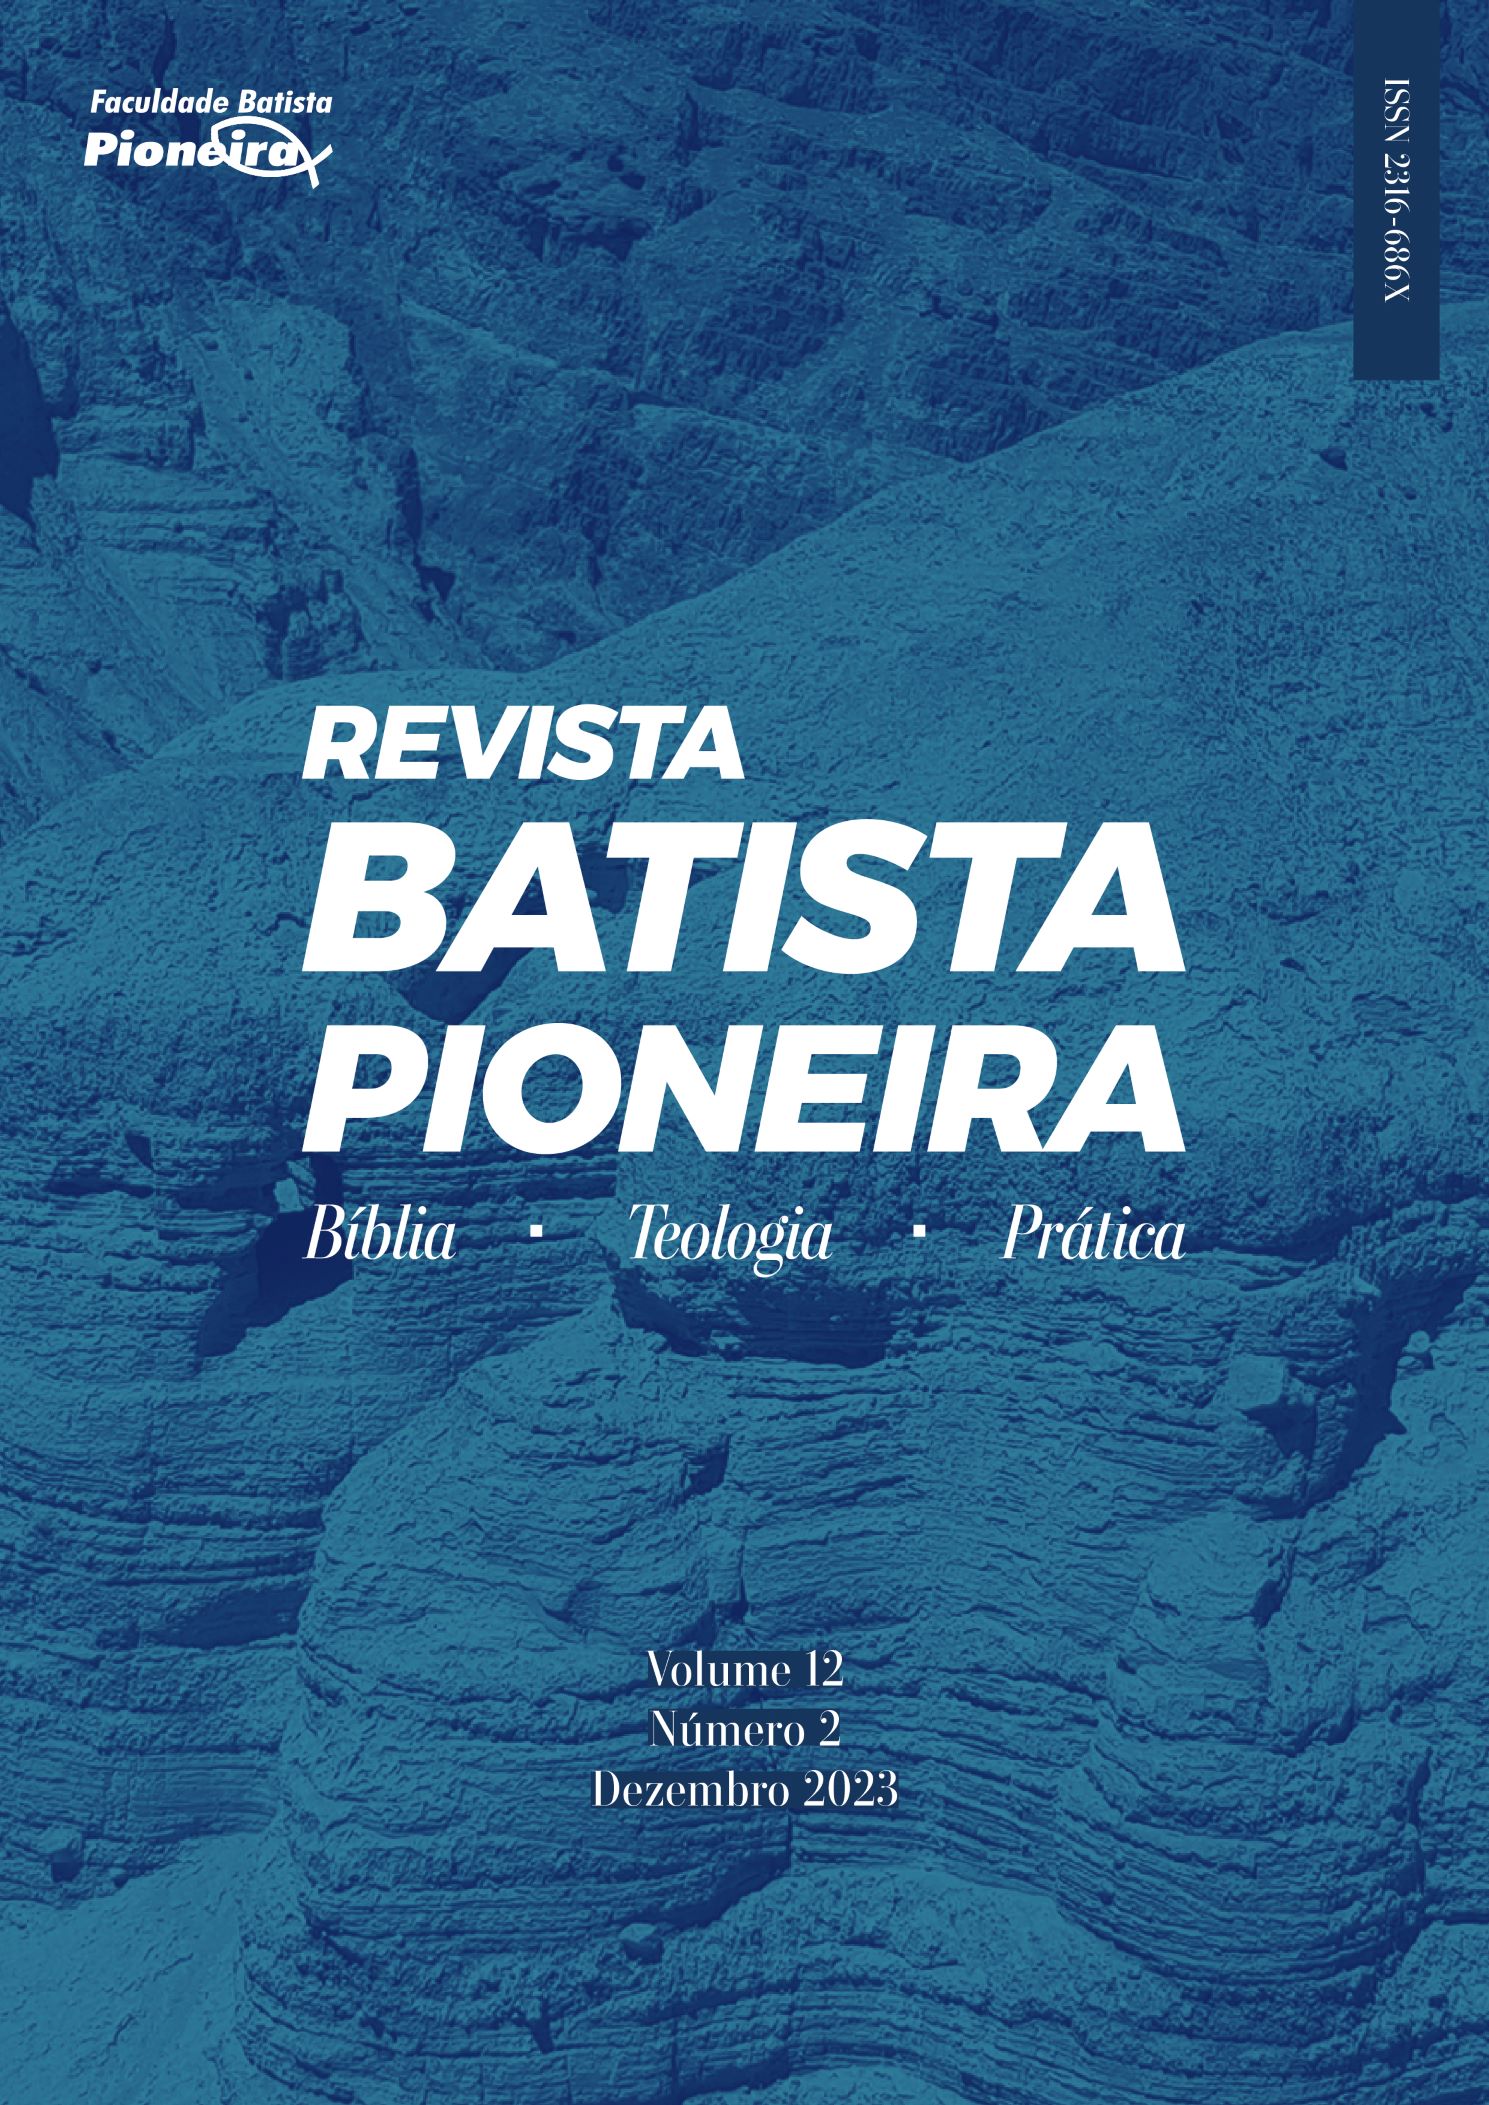 					Visualizar v. 12 n. 2 (2023): Revista Batista Pioneira
				